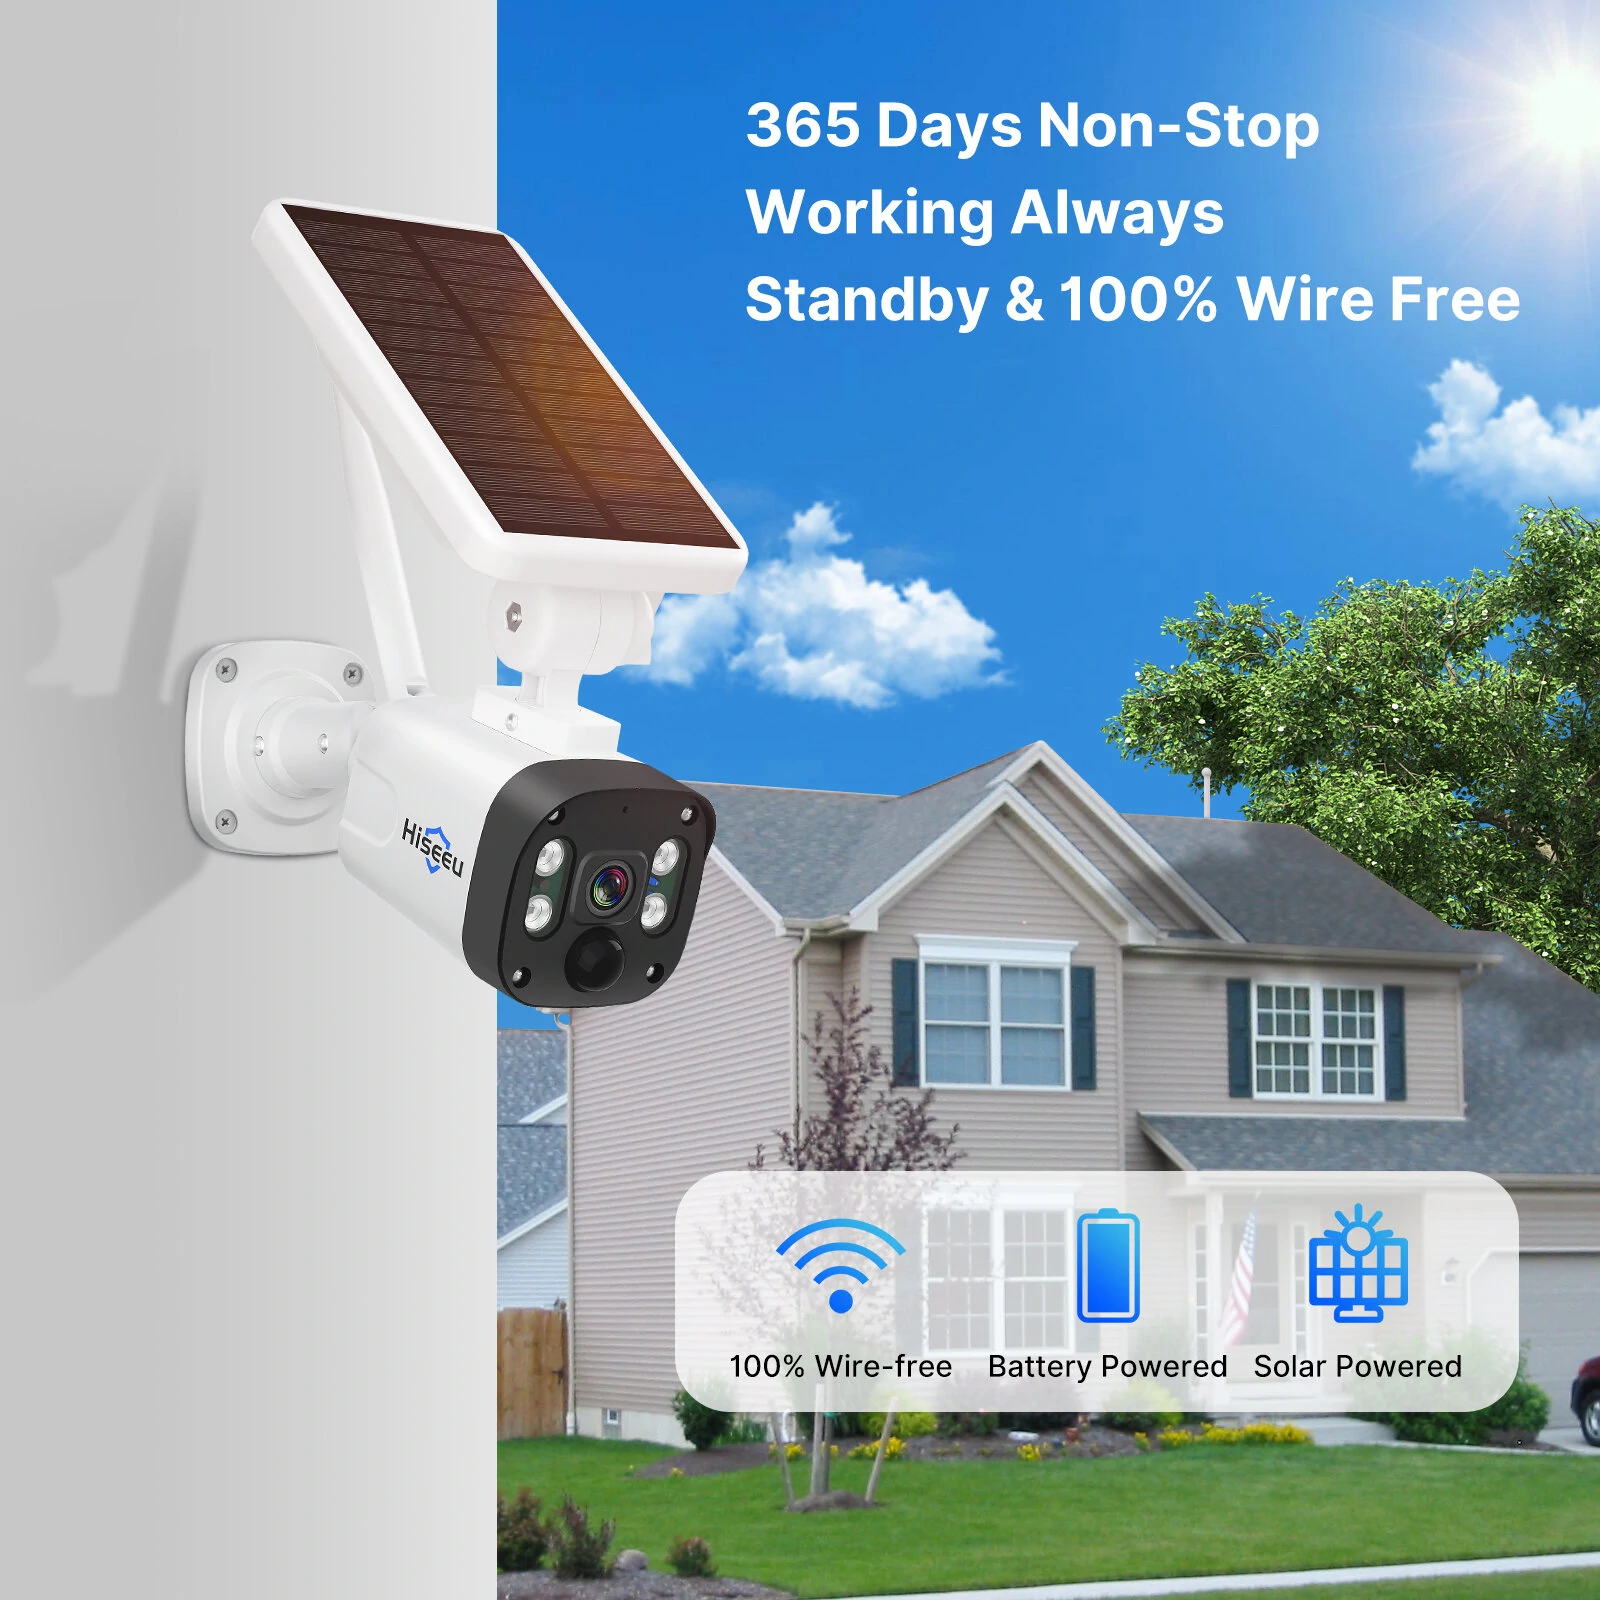 Hiseeu 3MP Wireless Security Camera System Solar Camera Outdoor Wireless Battery Powered Home Camera 2-Way Audio PIR Detection IP66 Waterproof Work with Alexa